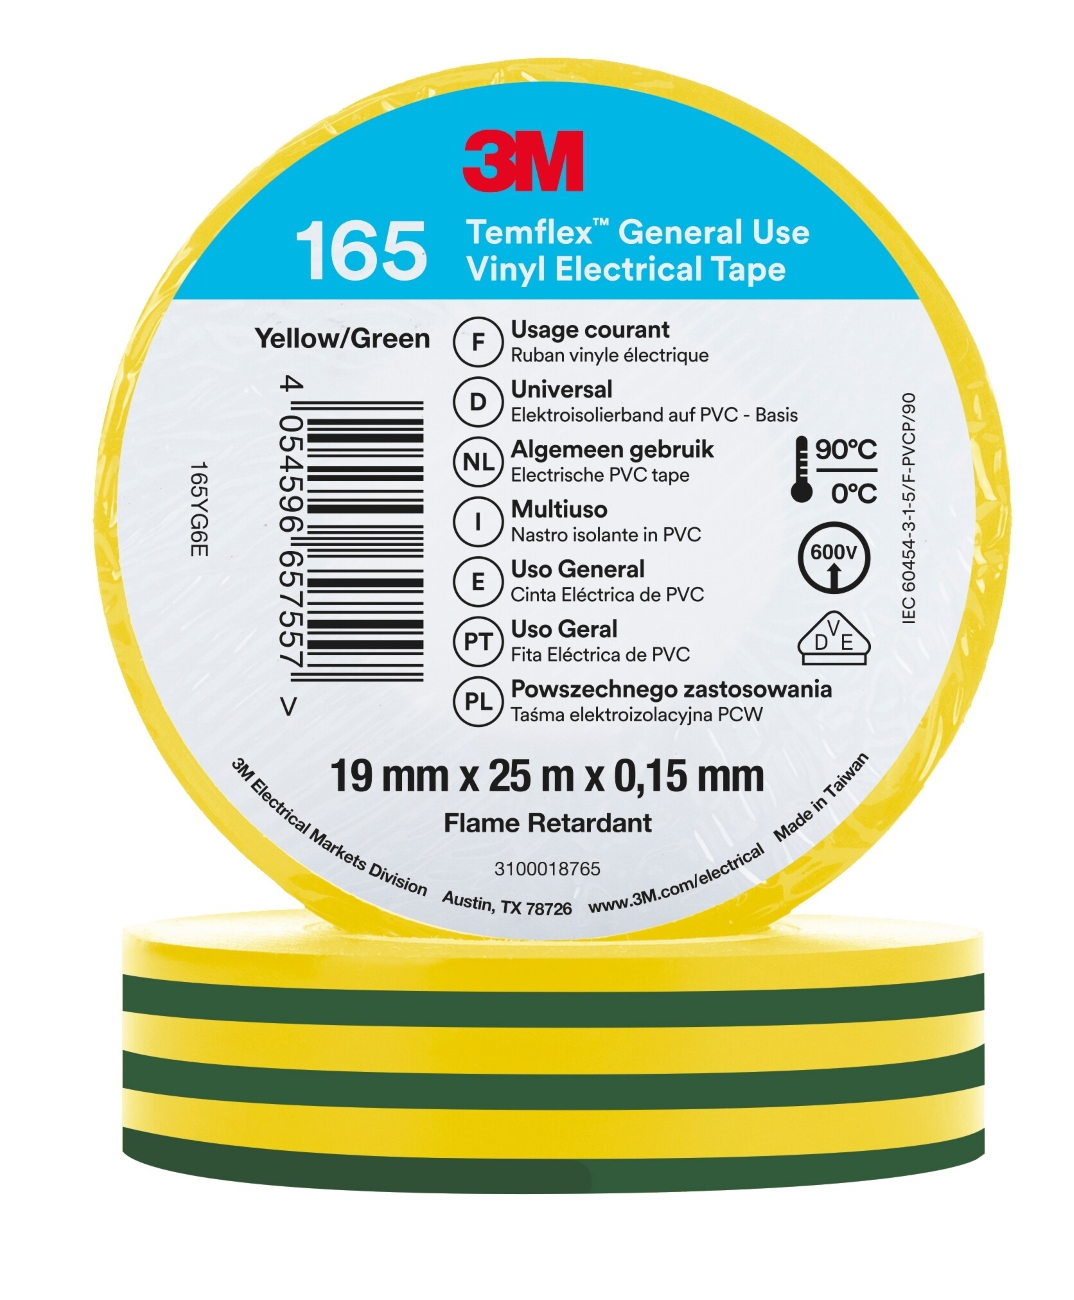 3M Temflex 165 vinyl electrical insulation tape, green/yellow, 19 mm x 25 m, 0.15 mm